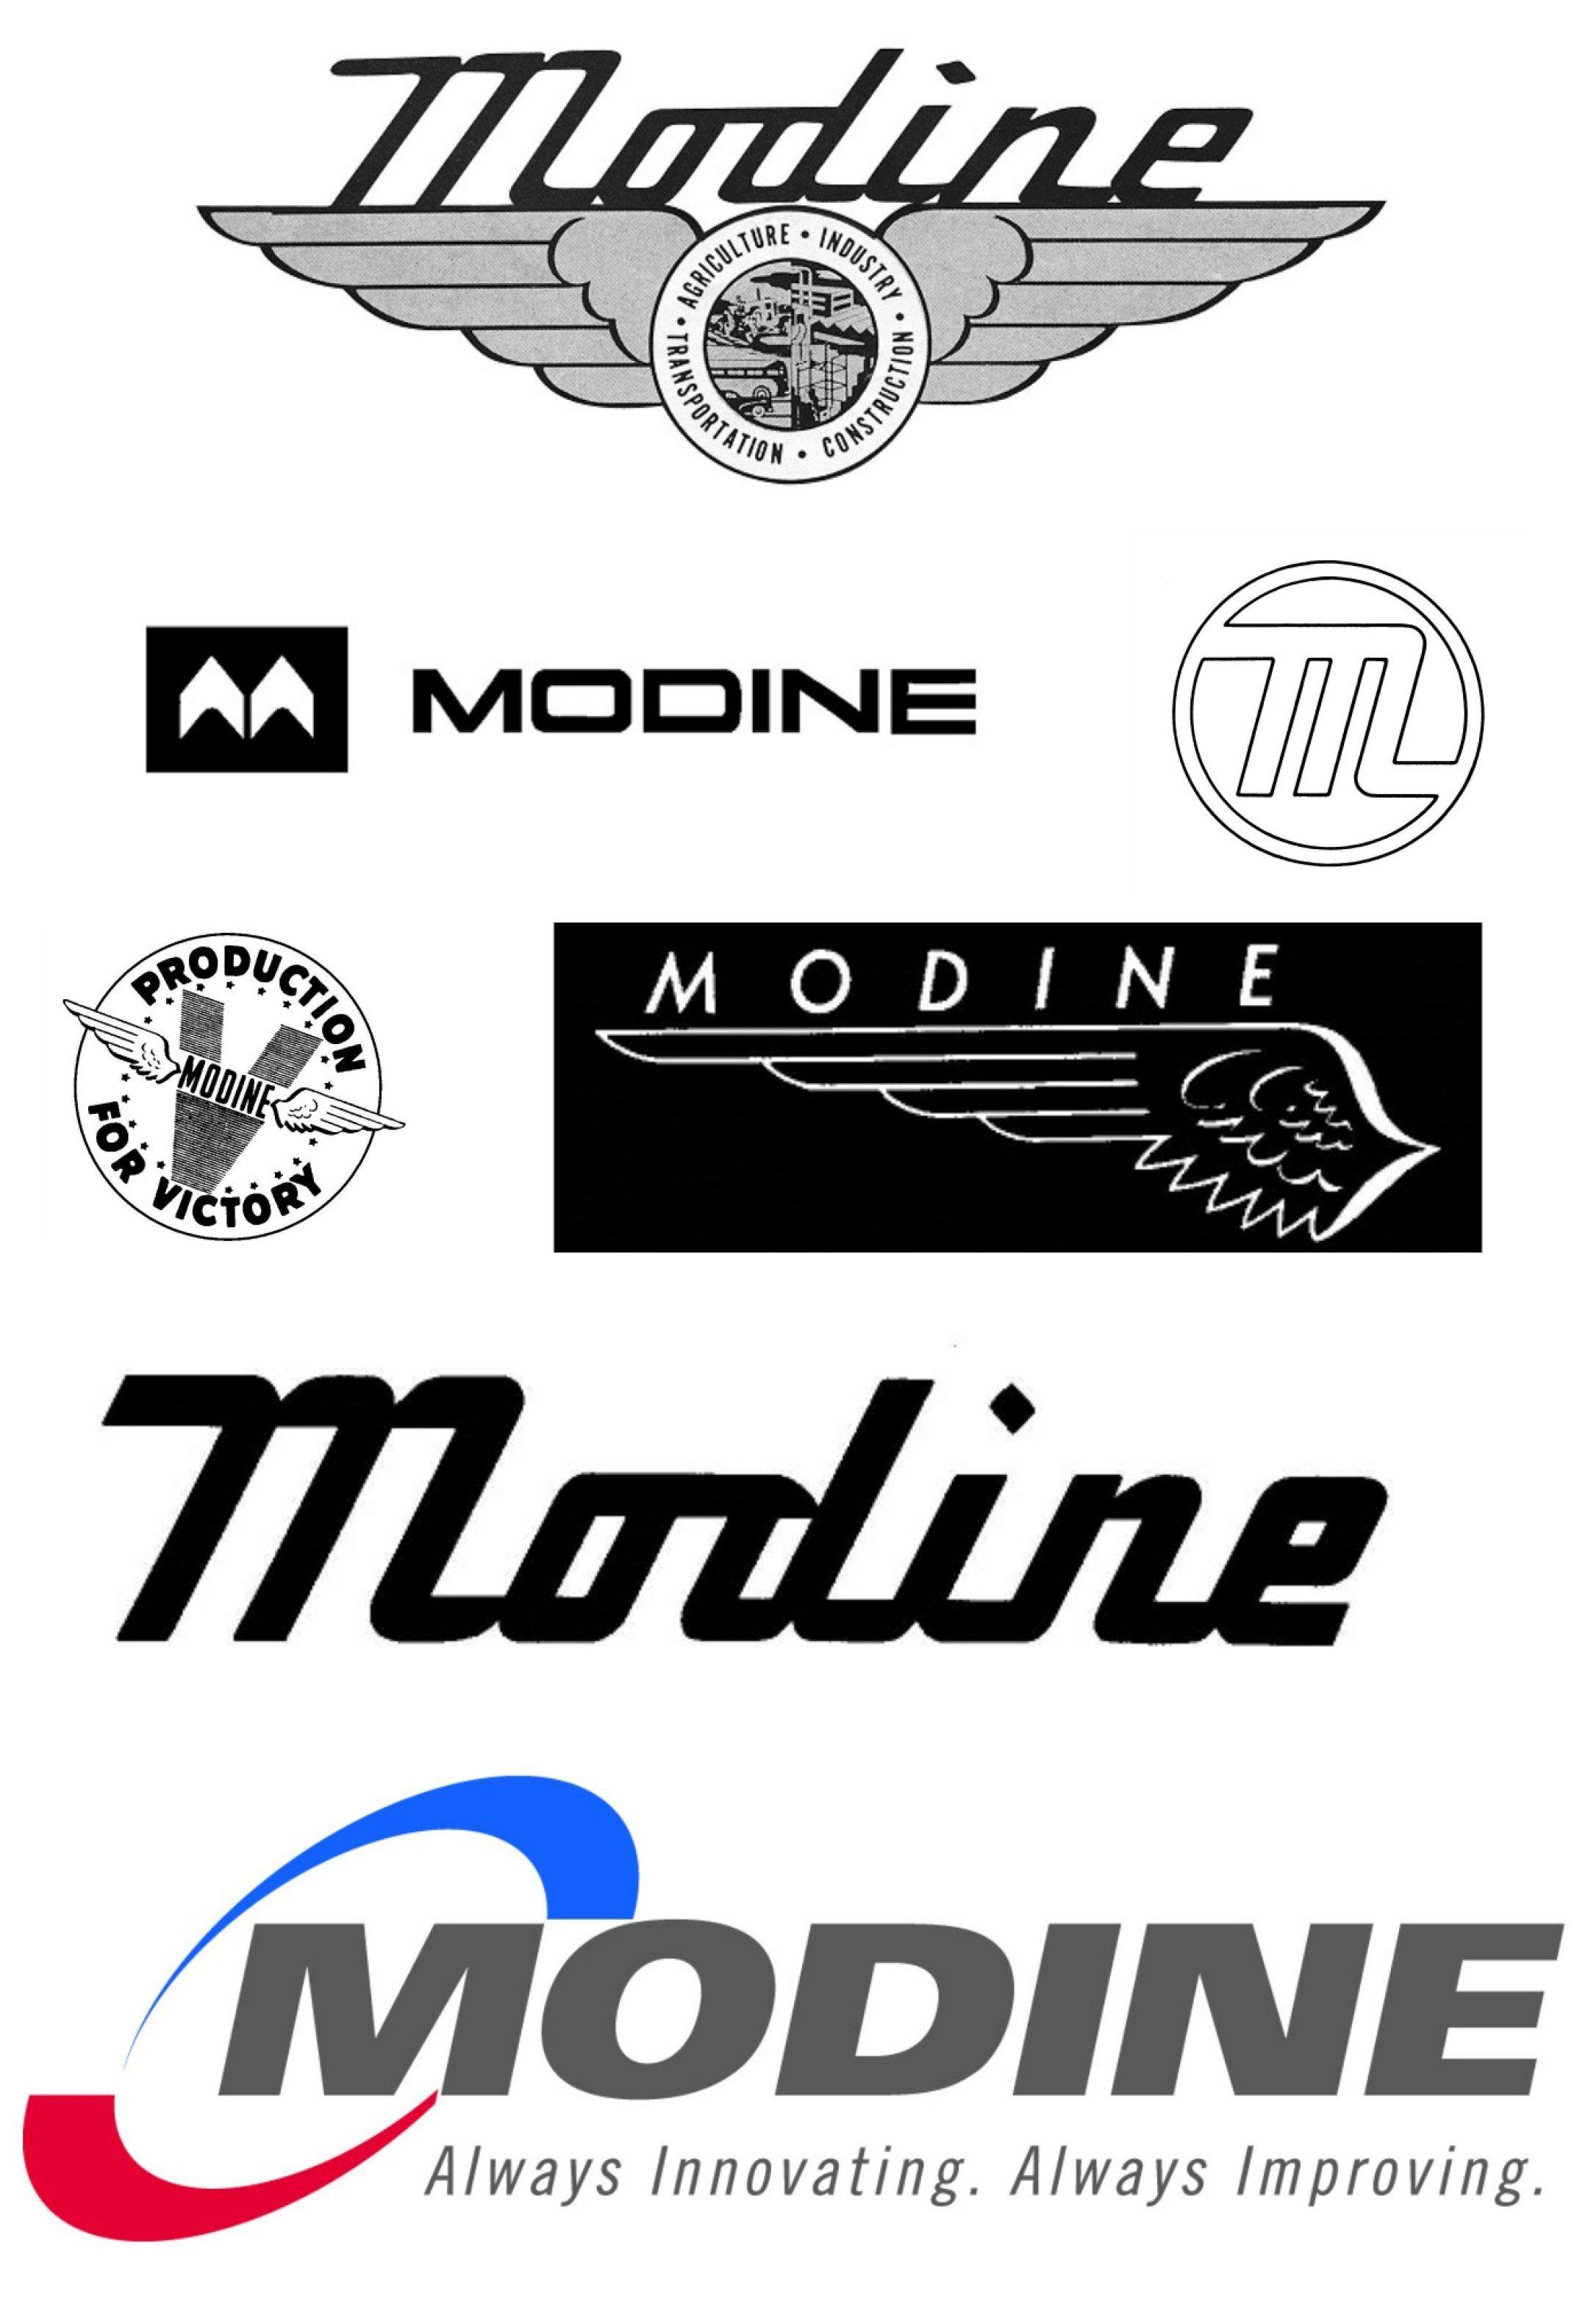 Modine Logo - History